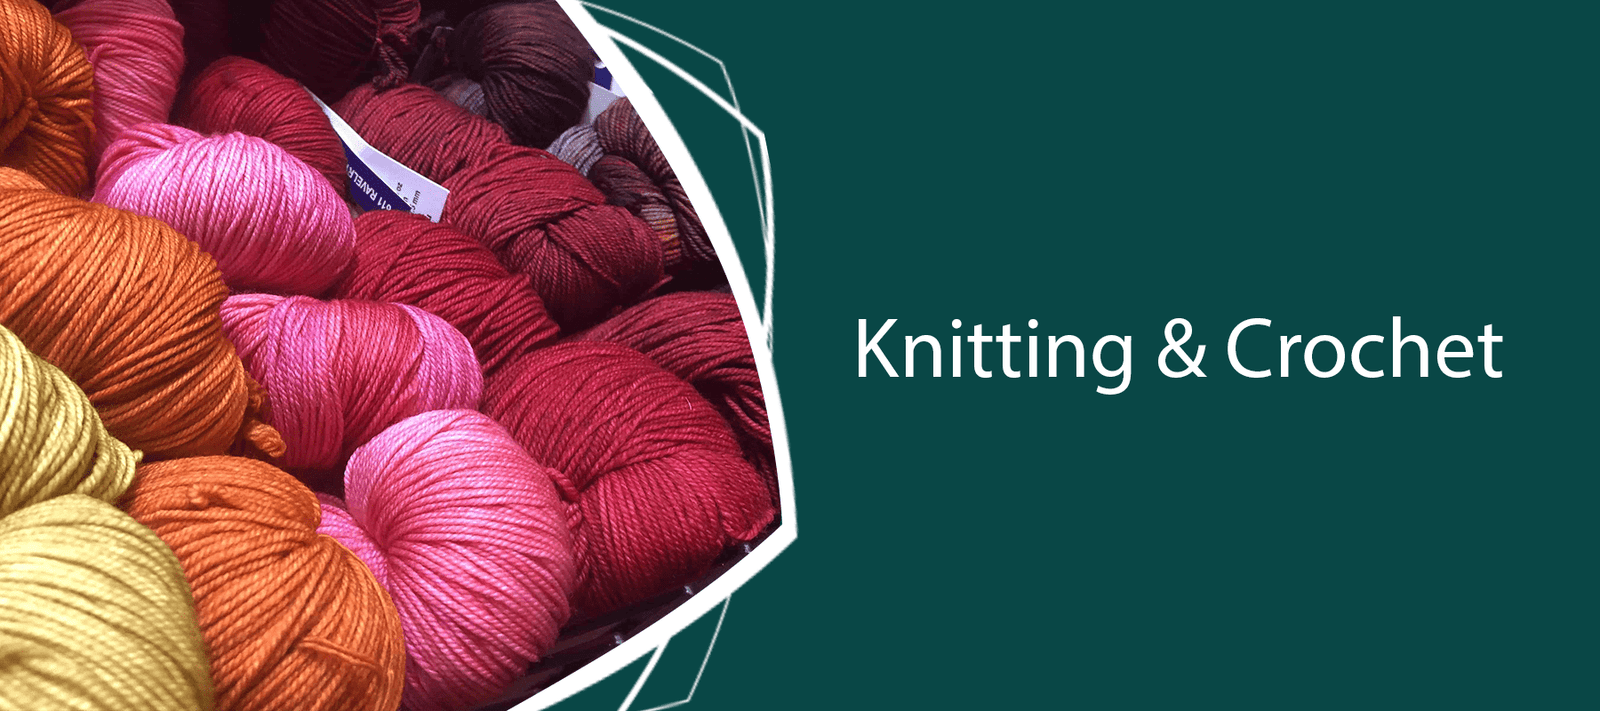 Knitting & Crochet Accessories